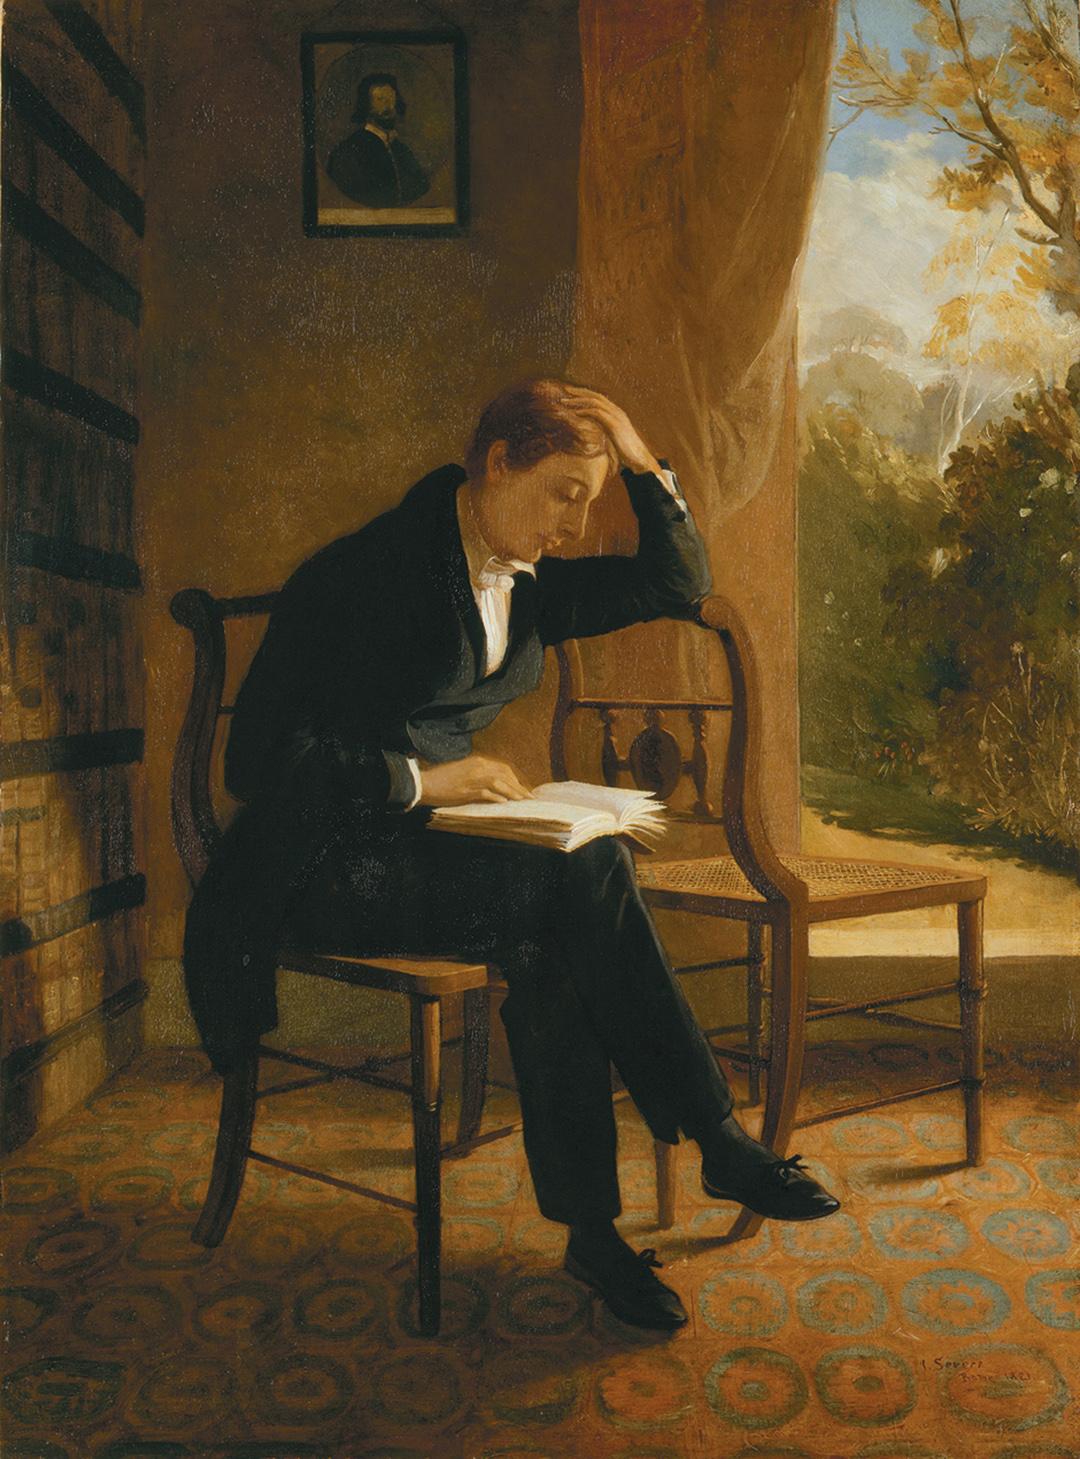 A portrait of John Keats reading, 1821–23, by Joseph Severn. Oil on canvas. National Portrait Gallery, London. (Public Domain)